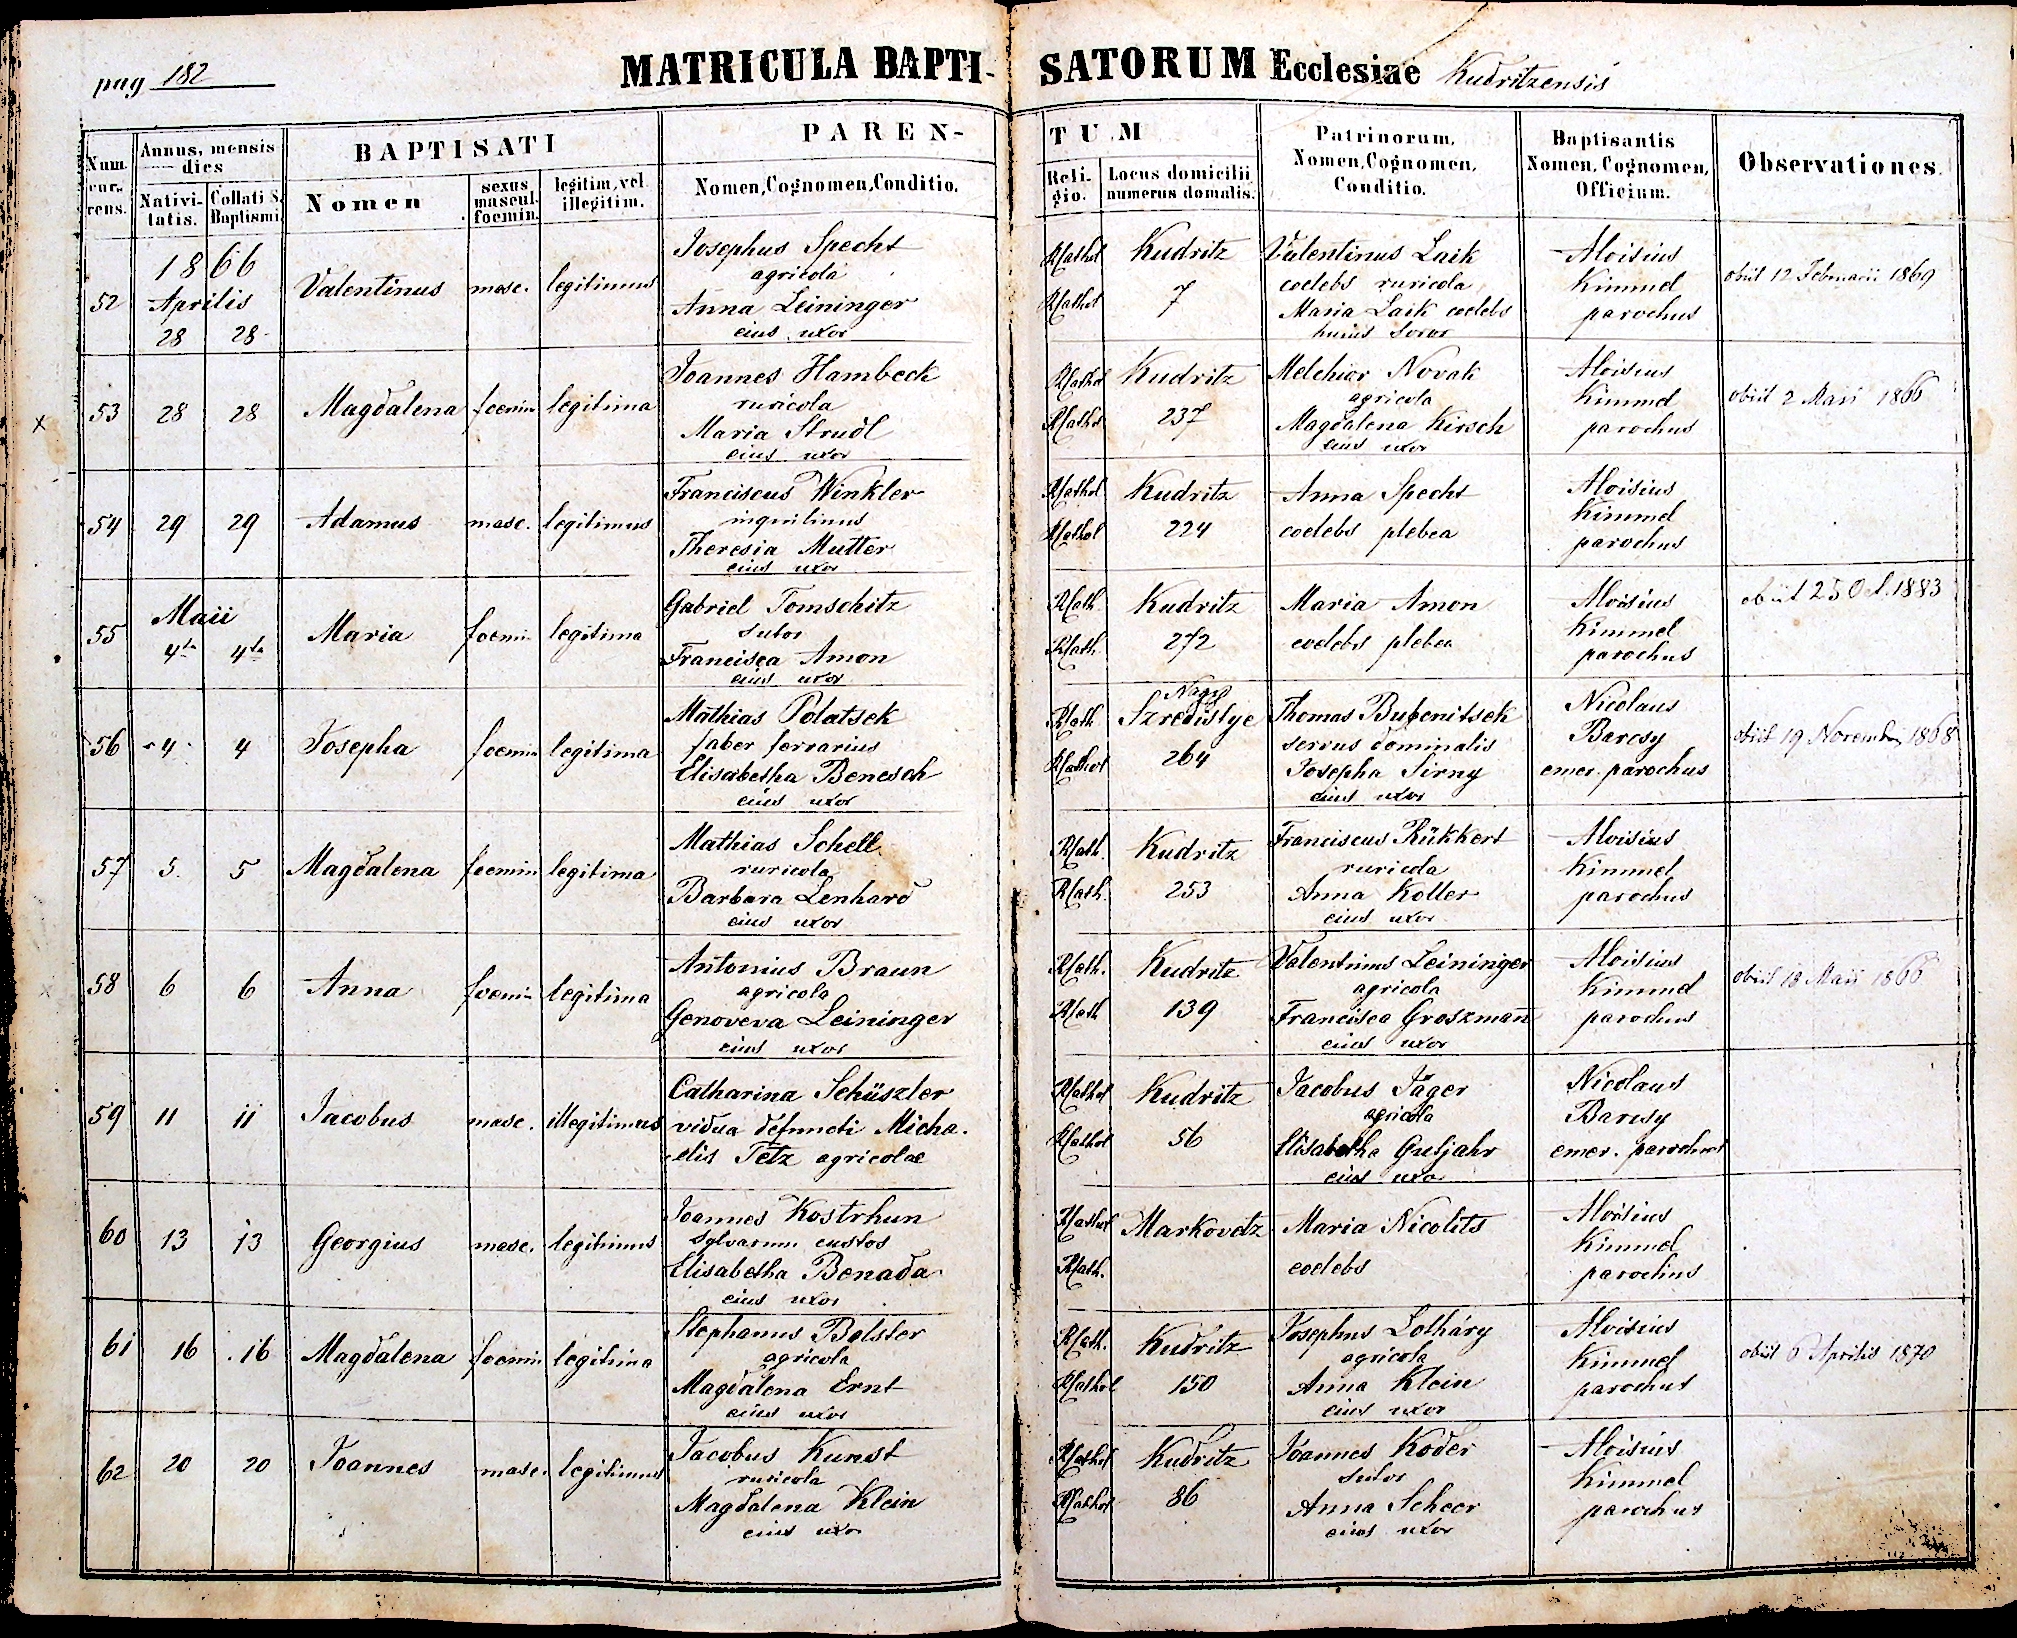 images/church_records/BIRTHS/1852-1870B/182